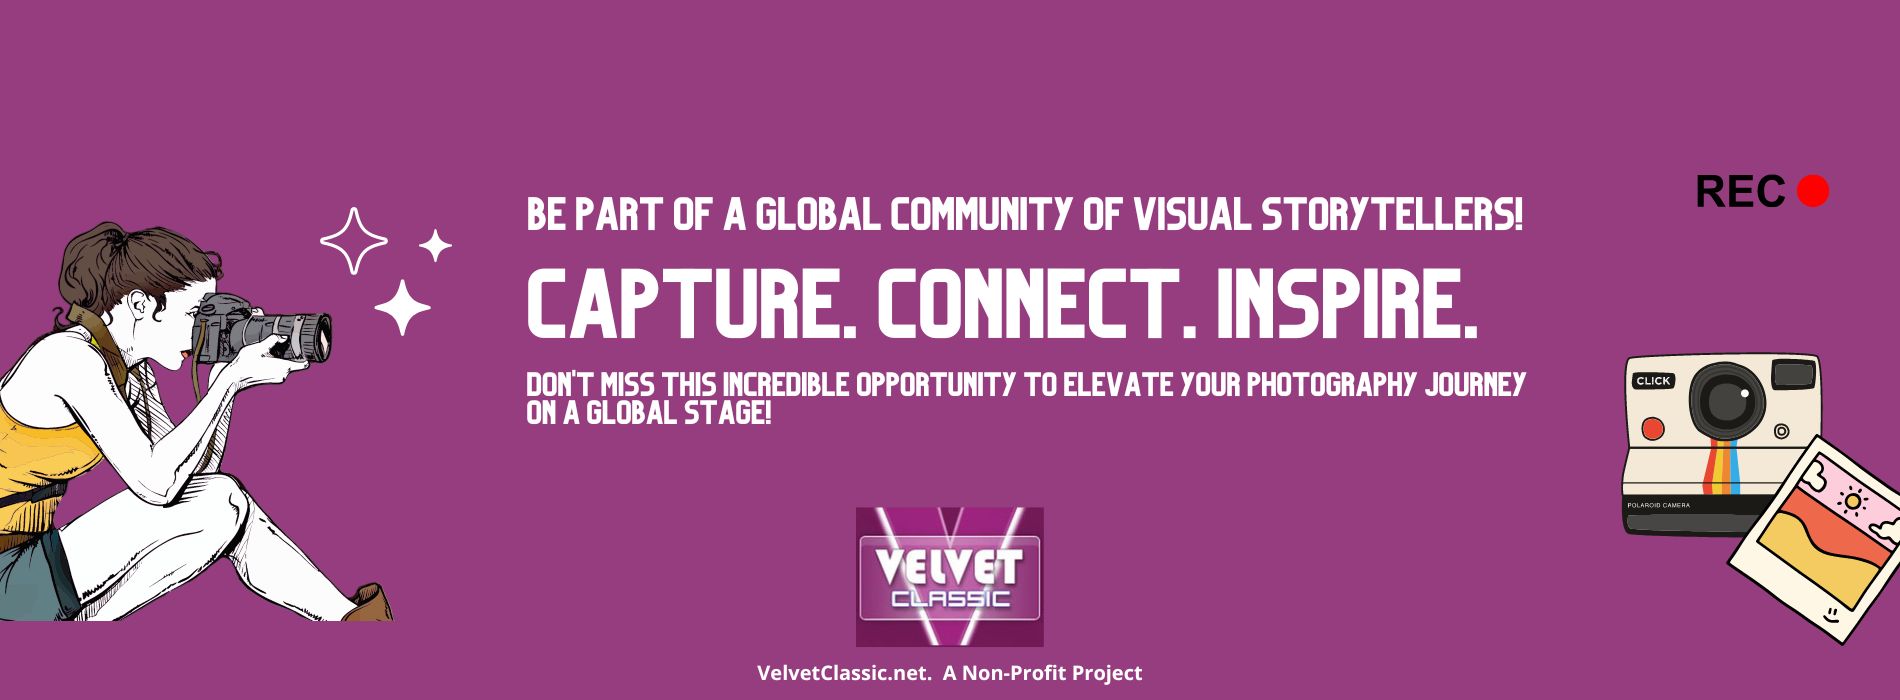 velvet-non-profit-capture-banner